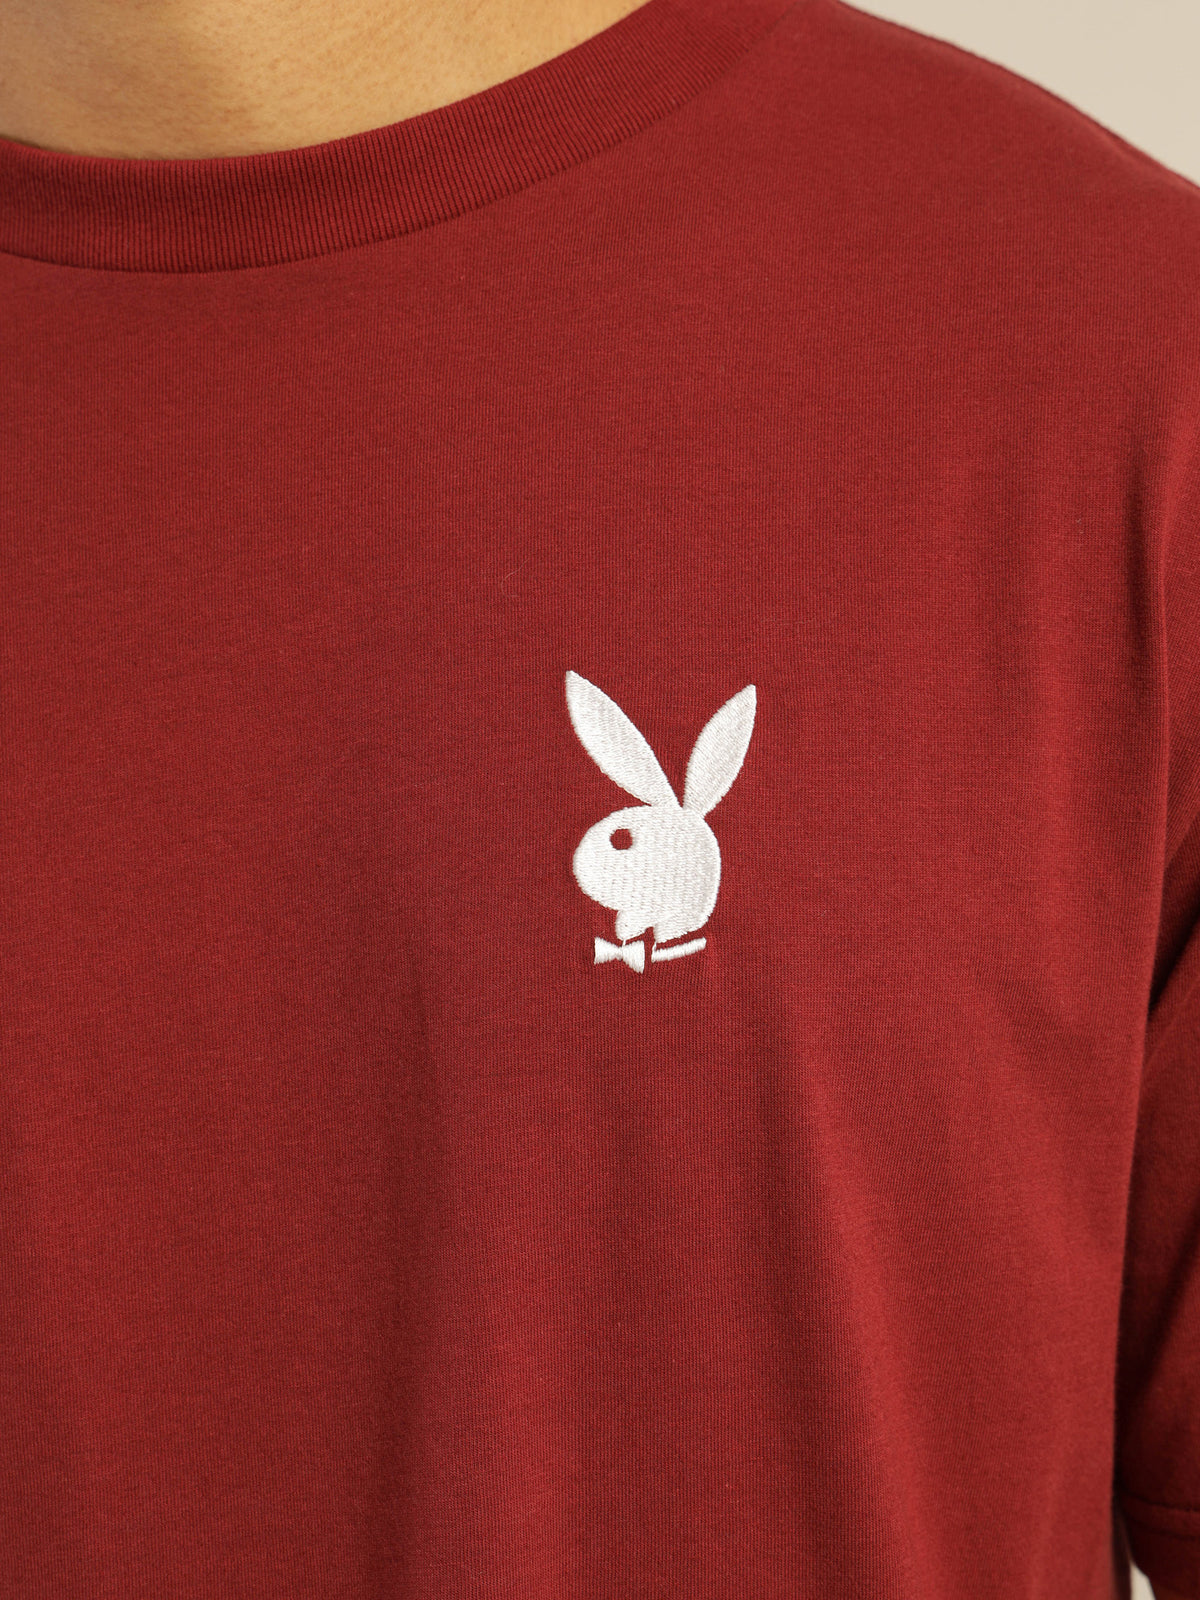 Bunny Basics T-Shirt in Burgundy